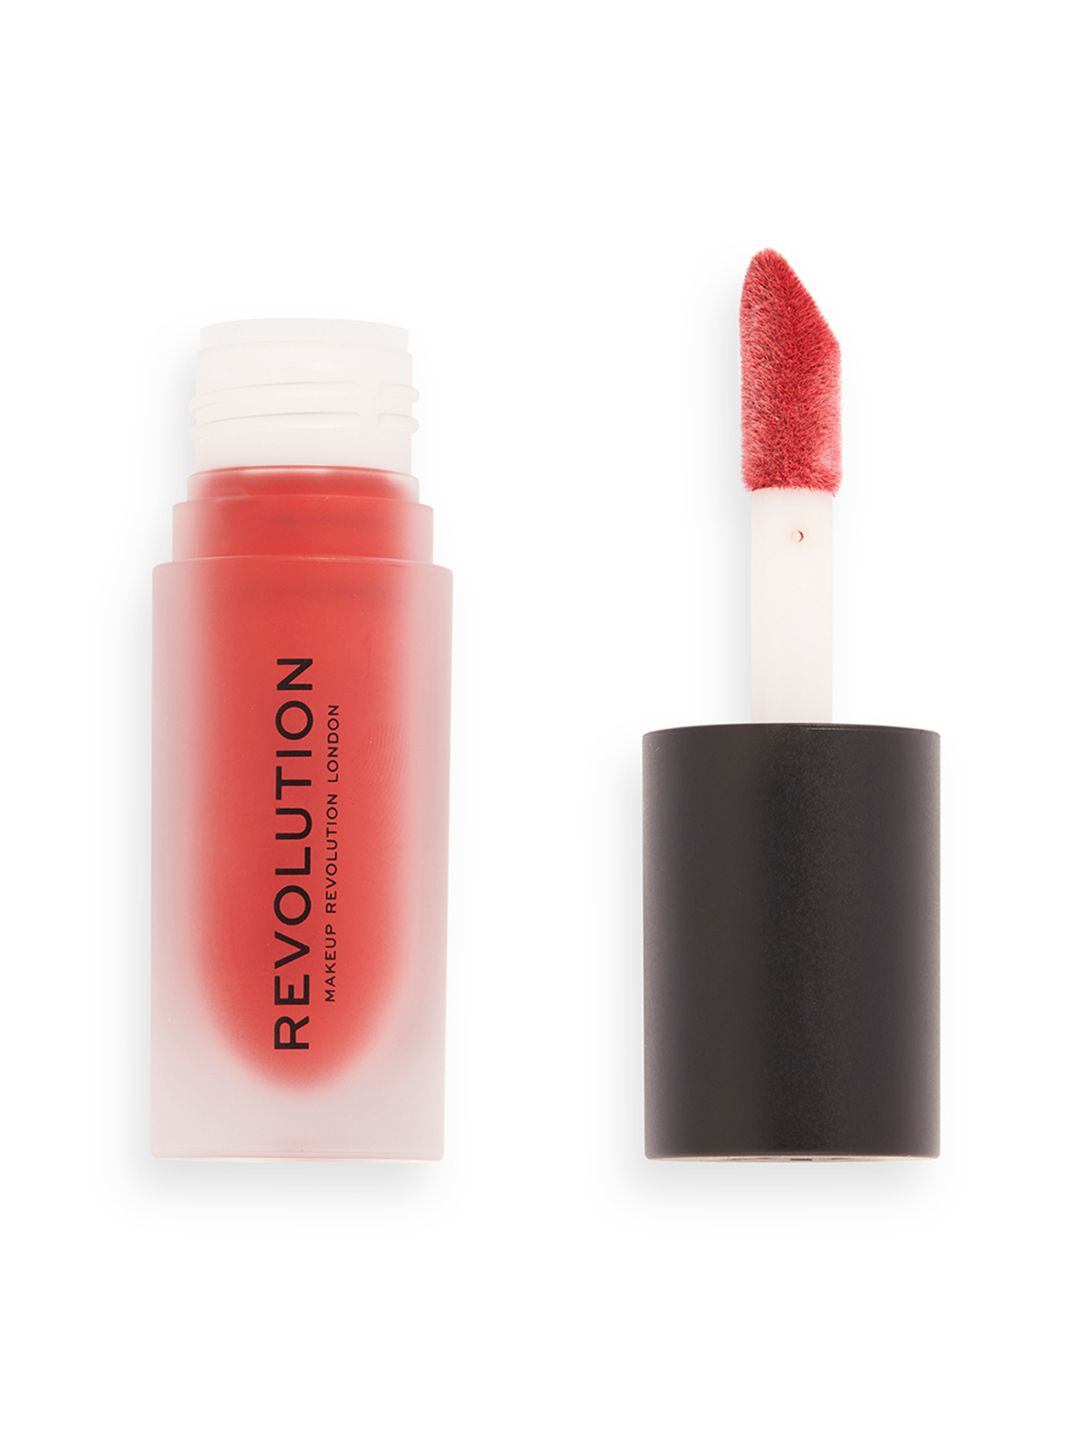 Makeup Revolution London Matte Bomb Liquid Lipstick - Lure Red Price in India